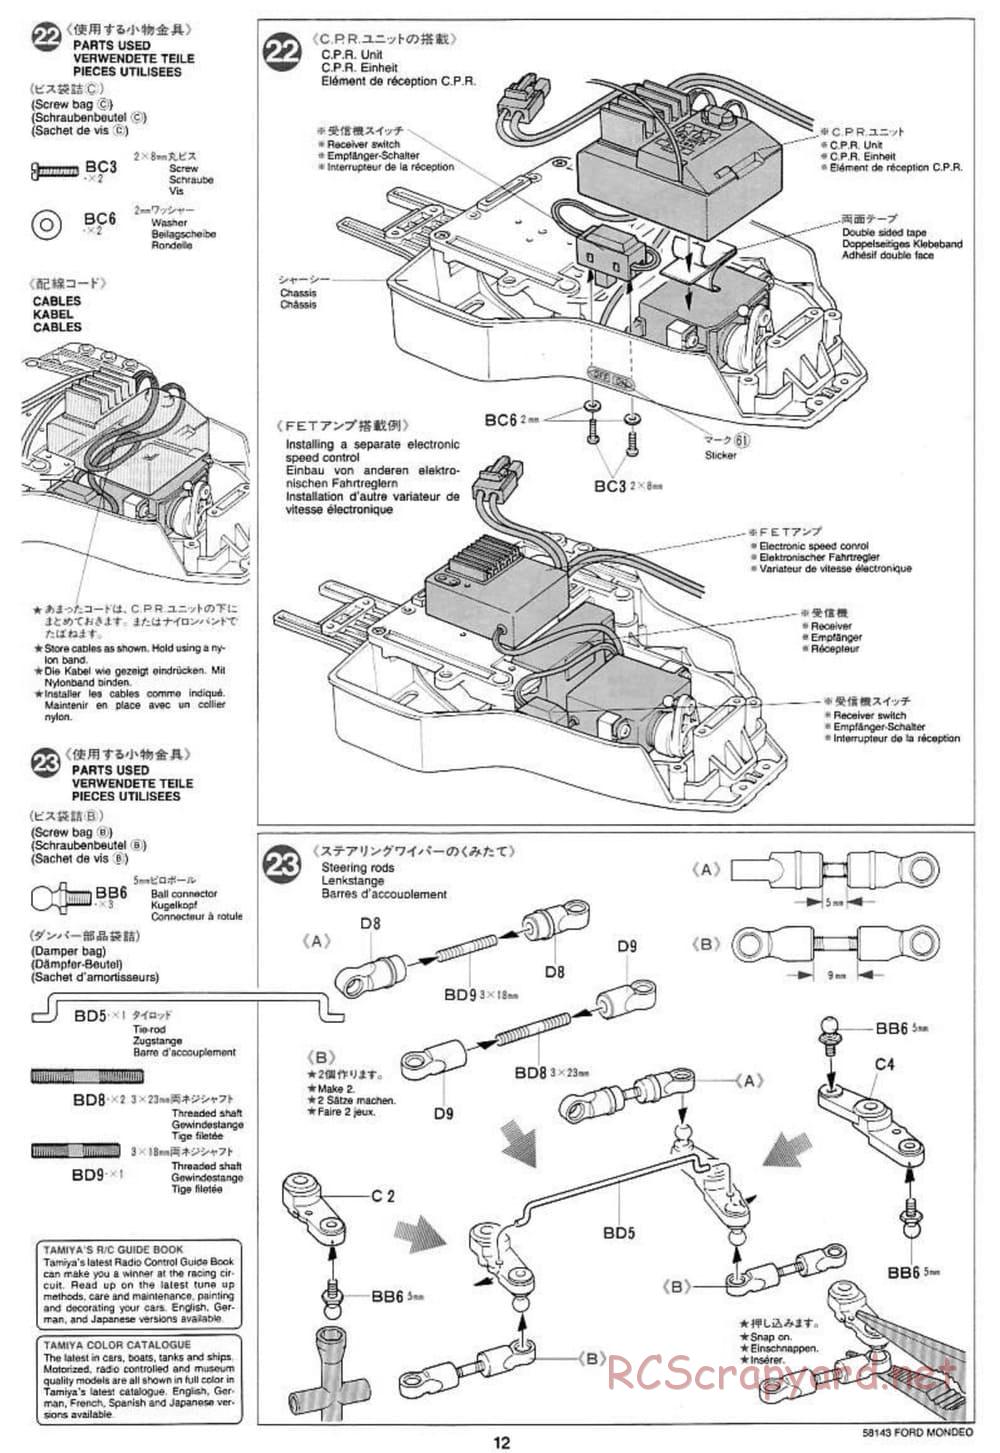 Tamiya - Ford Mondeo BTCC - FF-01 Chassis - Manual - Page 12